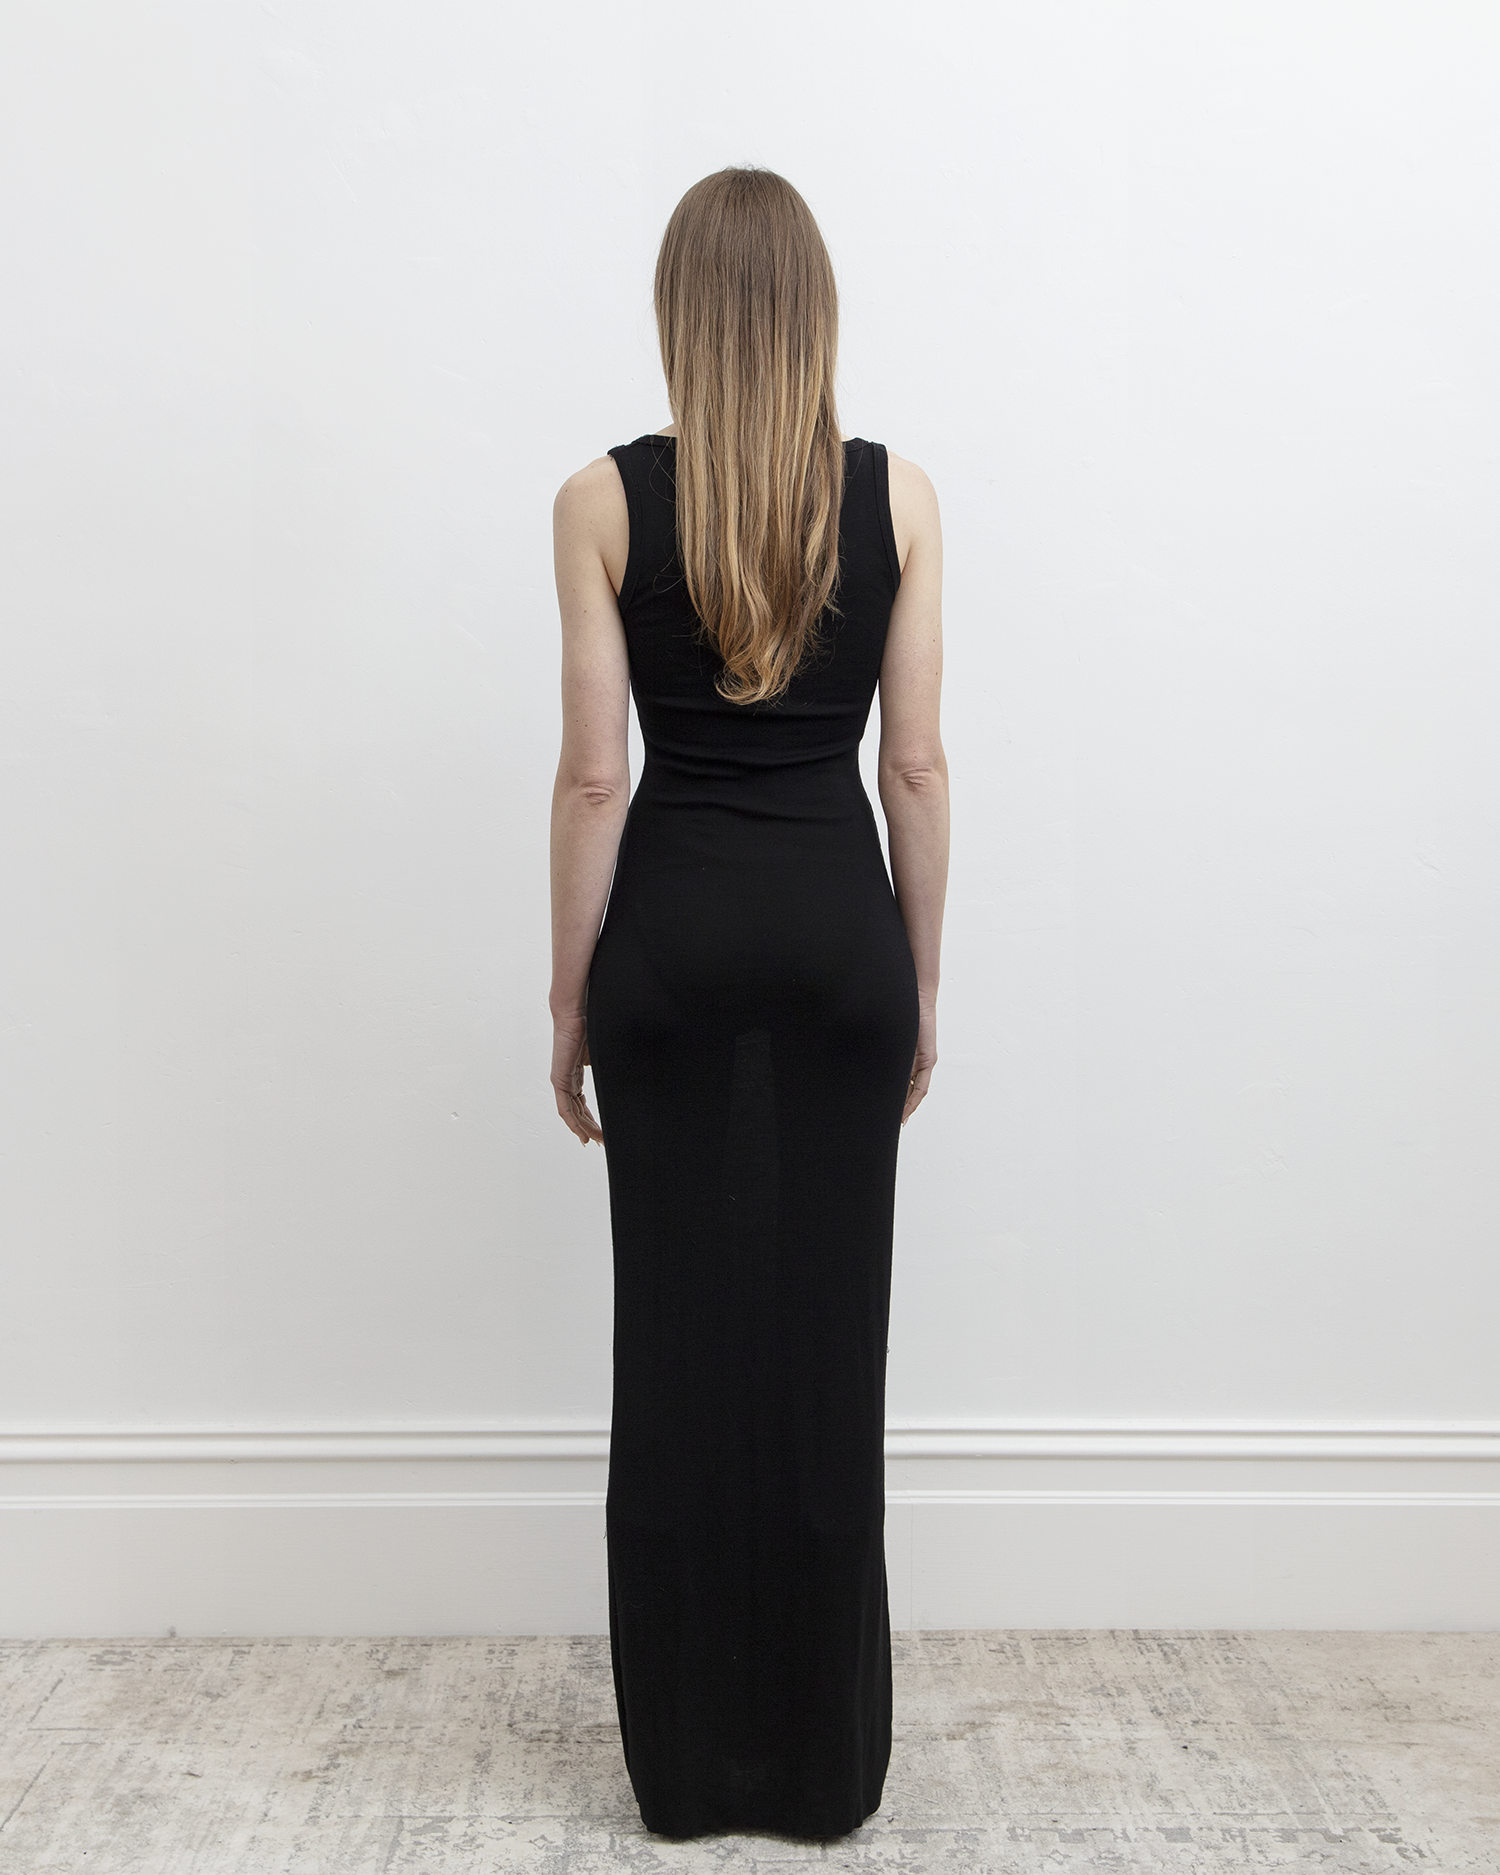 Kahe - Fatale Long Dress Black